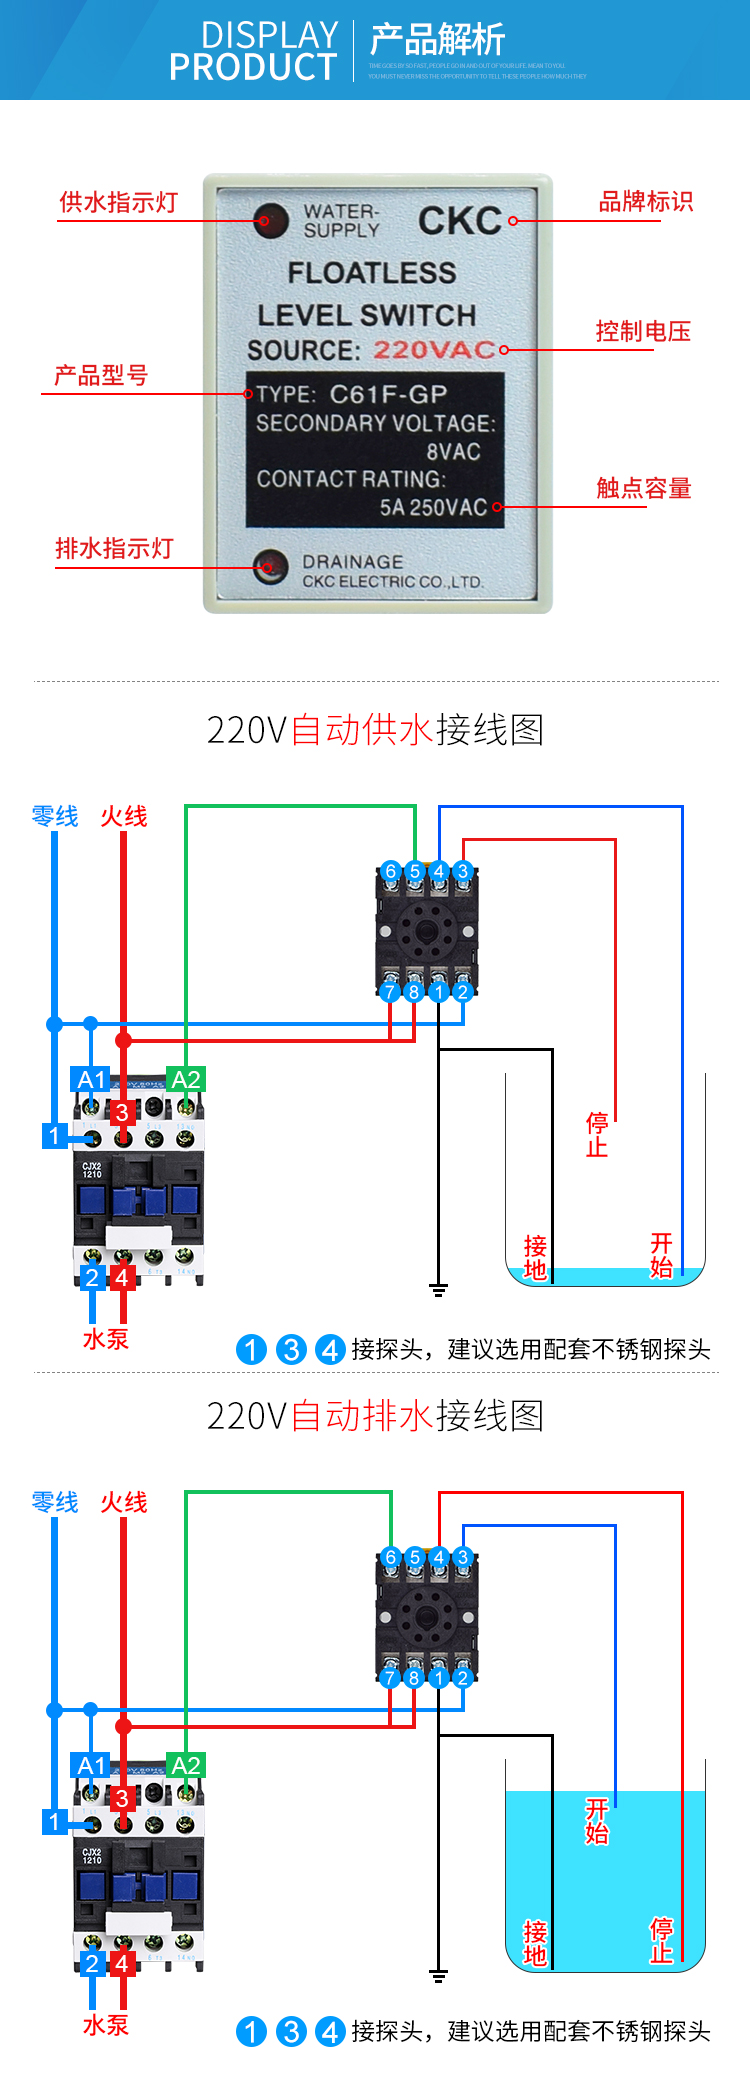 定做 液位继电器 c61f-gp 液面控制器 220v 380v 水泵水箱 c61f-gp